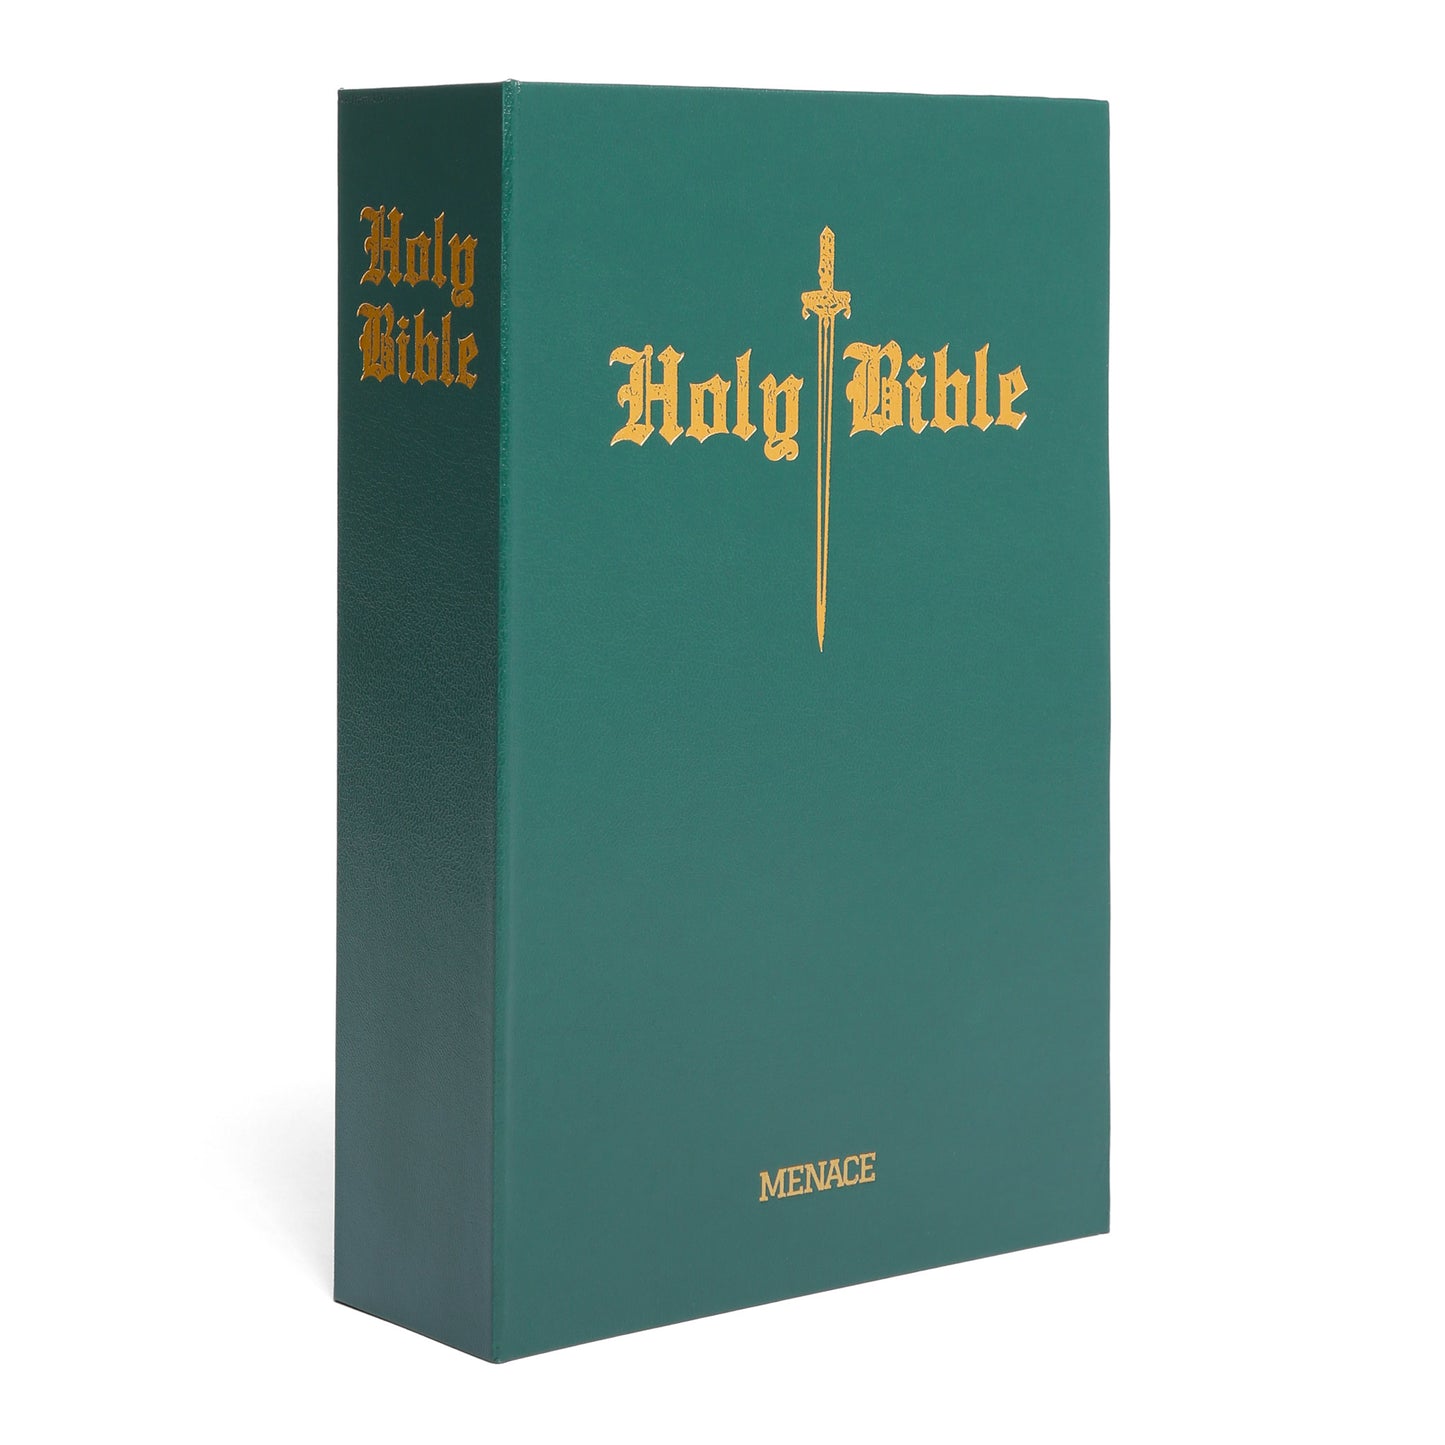 MENACE HOLY BIBLE SAFE BOX by MENACE